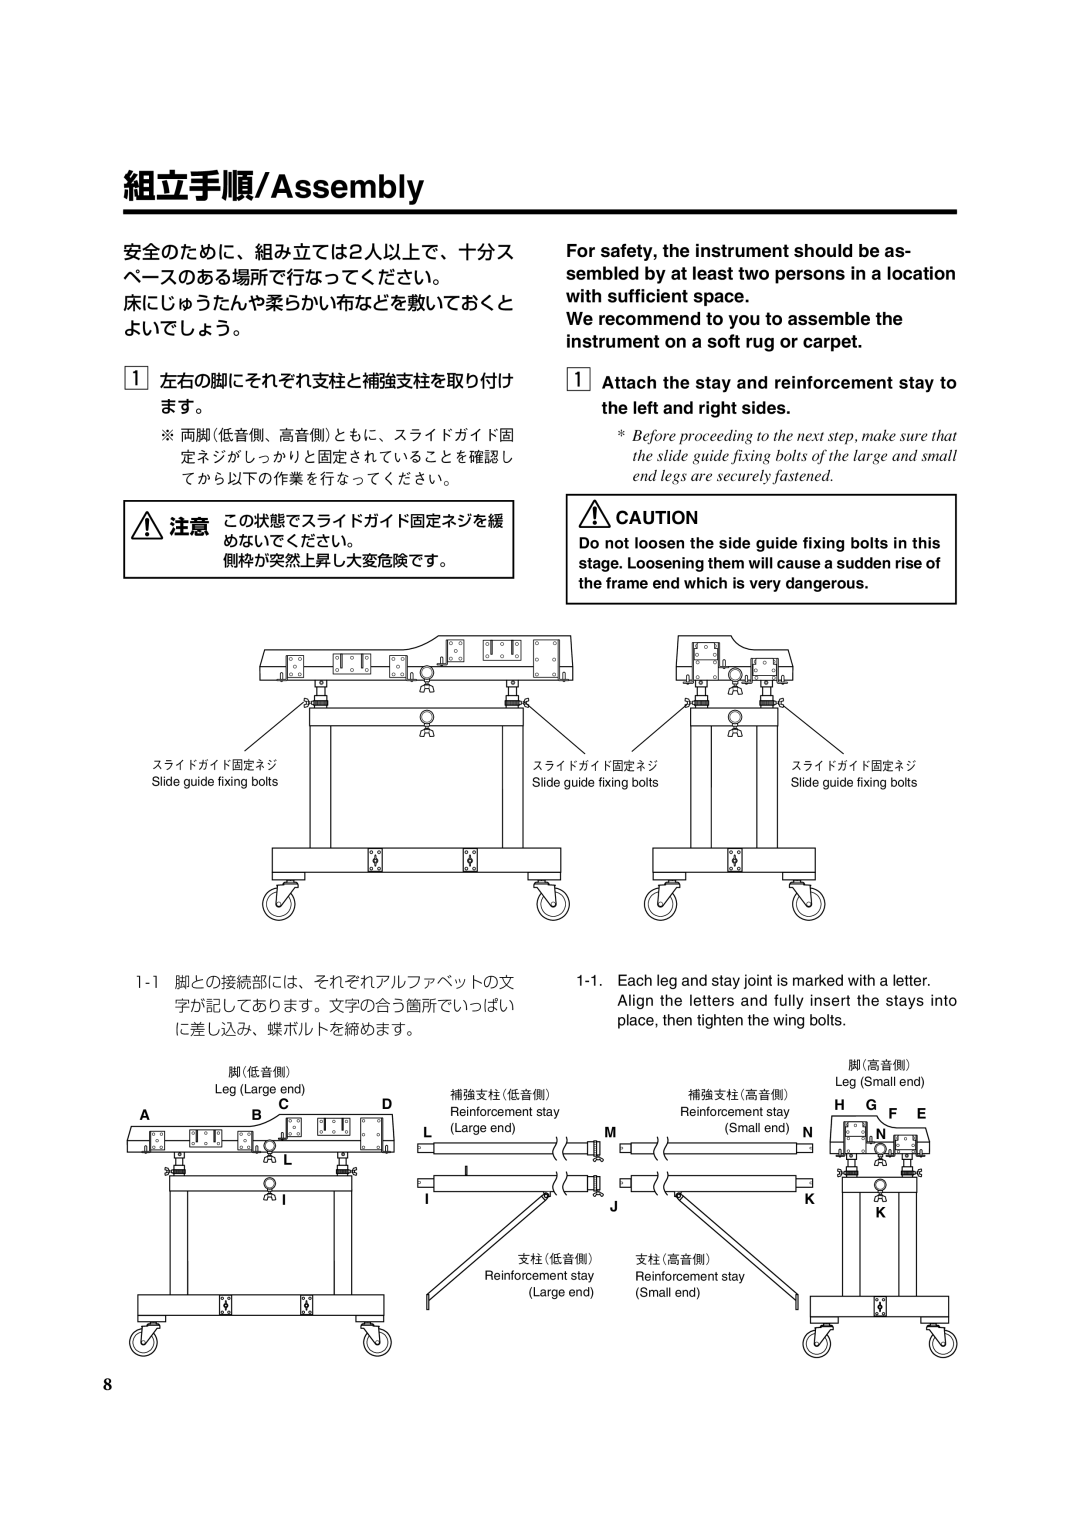 Yamaha Concert Marimba, YM6100 owner manual 組立手順/Assembly, 安全のために、組み立ては2人以上で、十分ス ペースのある場所で行なってください。 